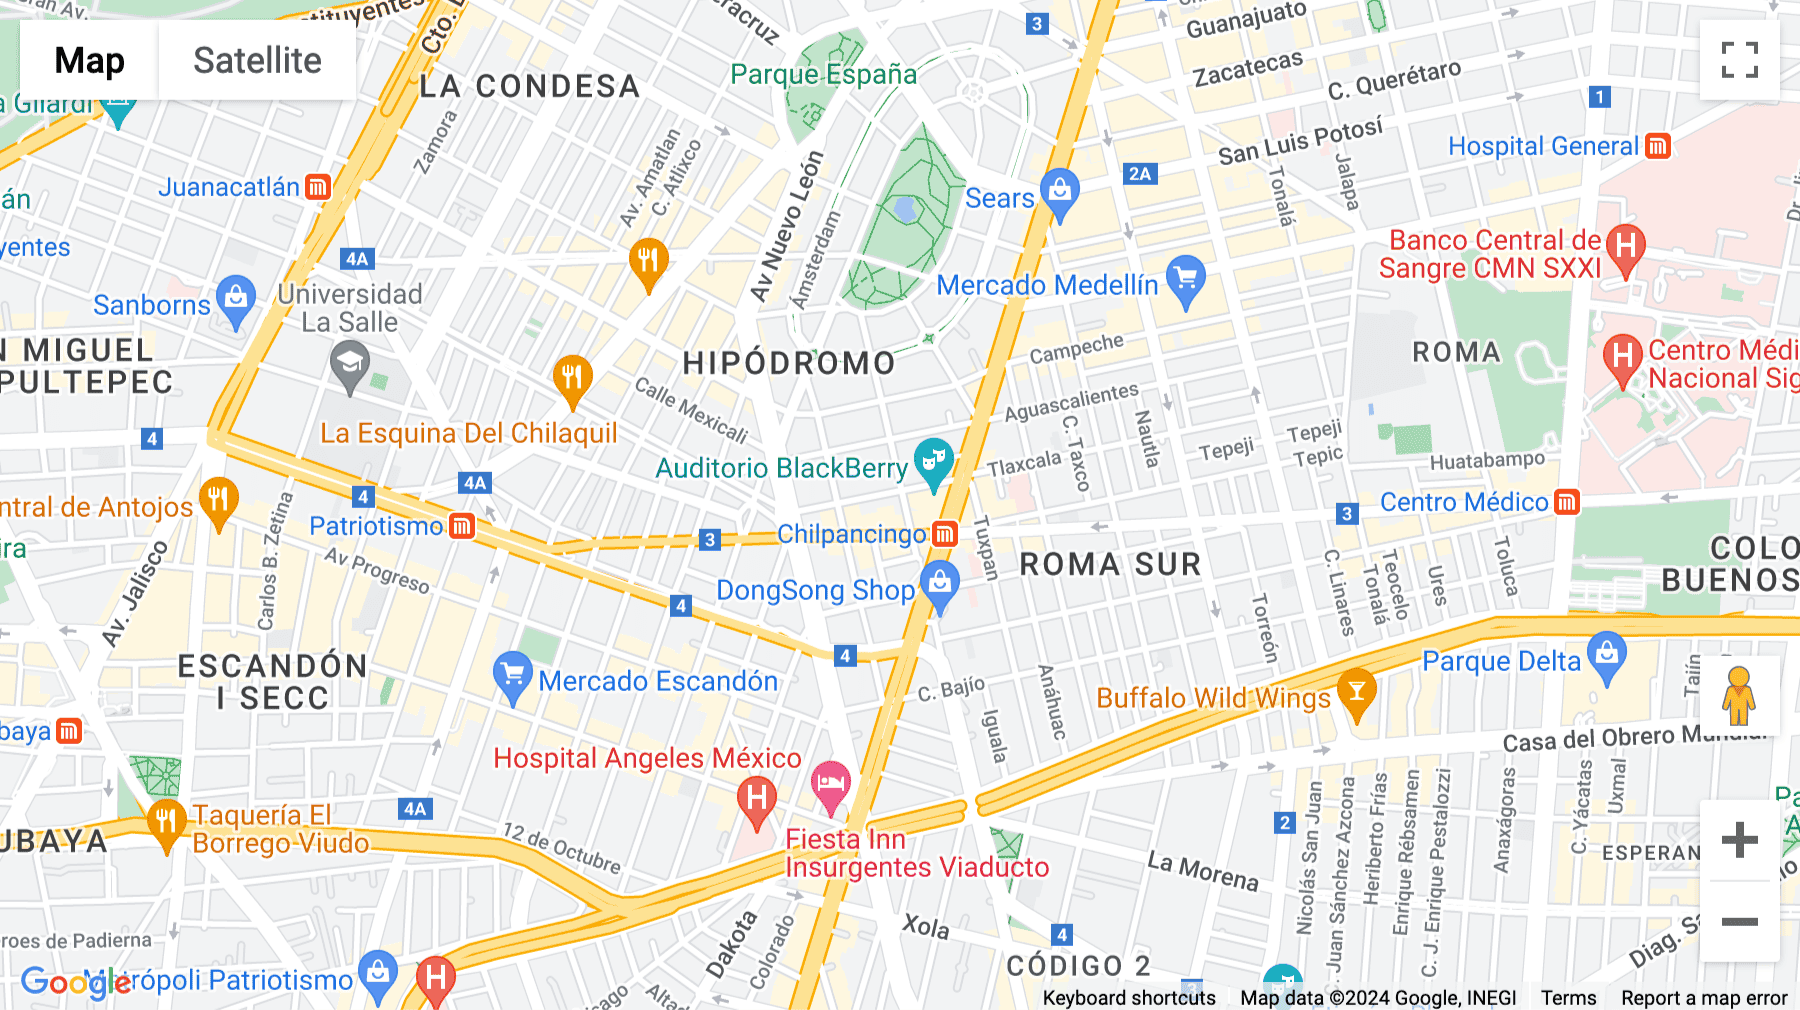 Click for interative map of Chilpancingo 71, Hipodromo Condesa, Cuauhtémoc, Mexico City, Mexico, Mexico City